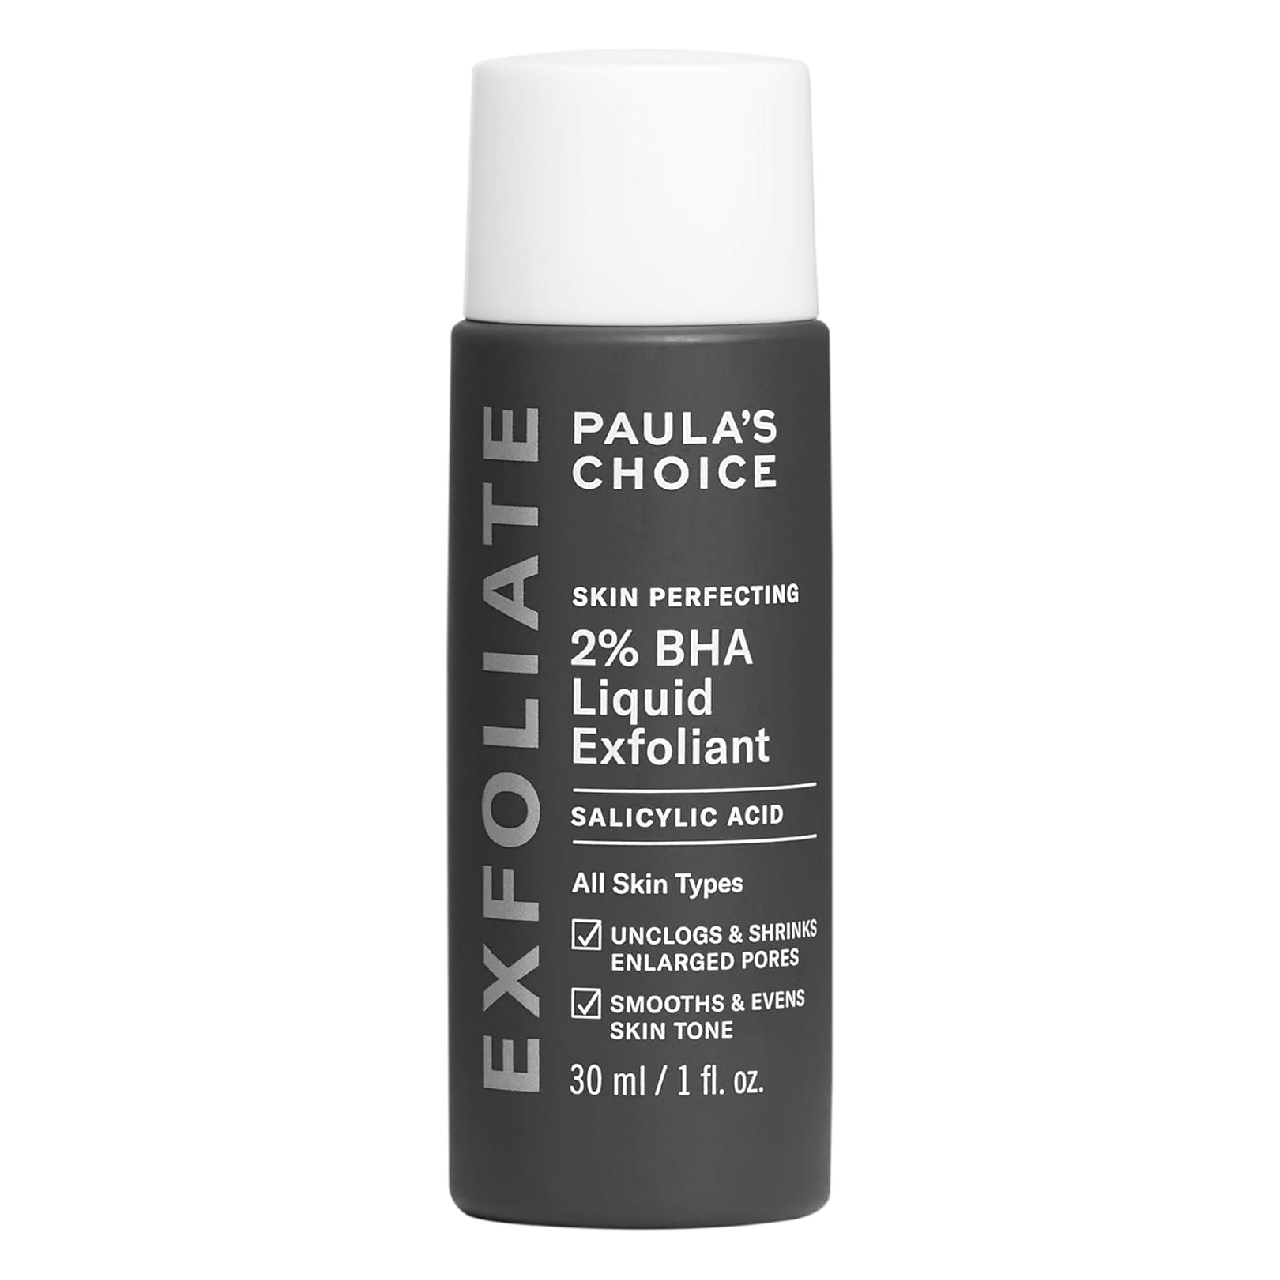 Bottle of Paula’s Choice Skin Perfecting 2% BHA Liquid Exfoliant on a white background.